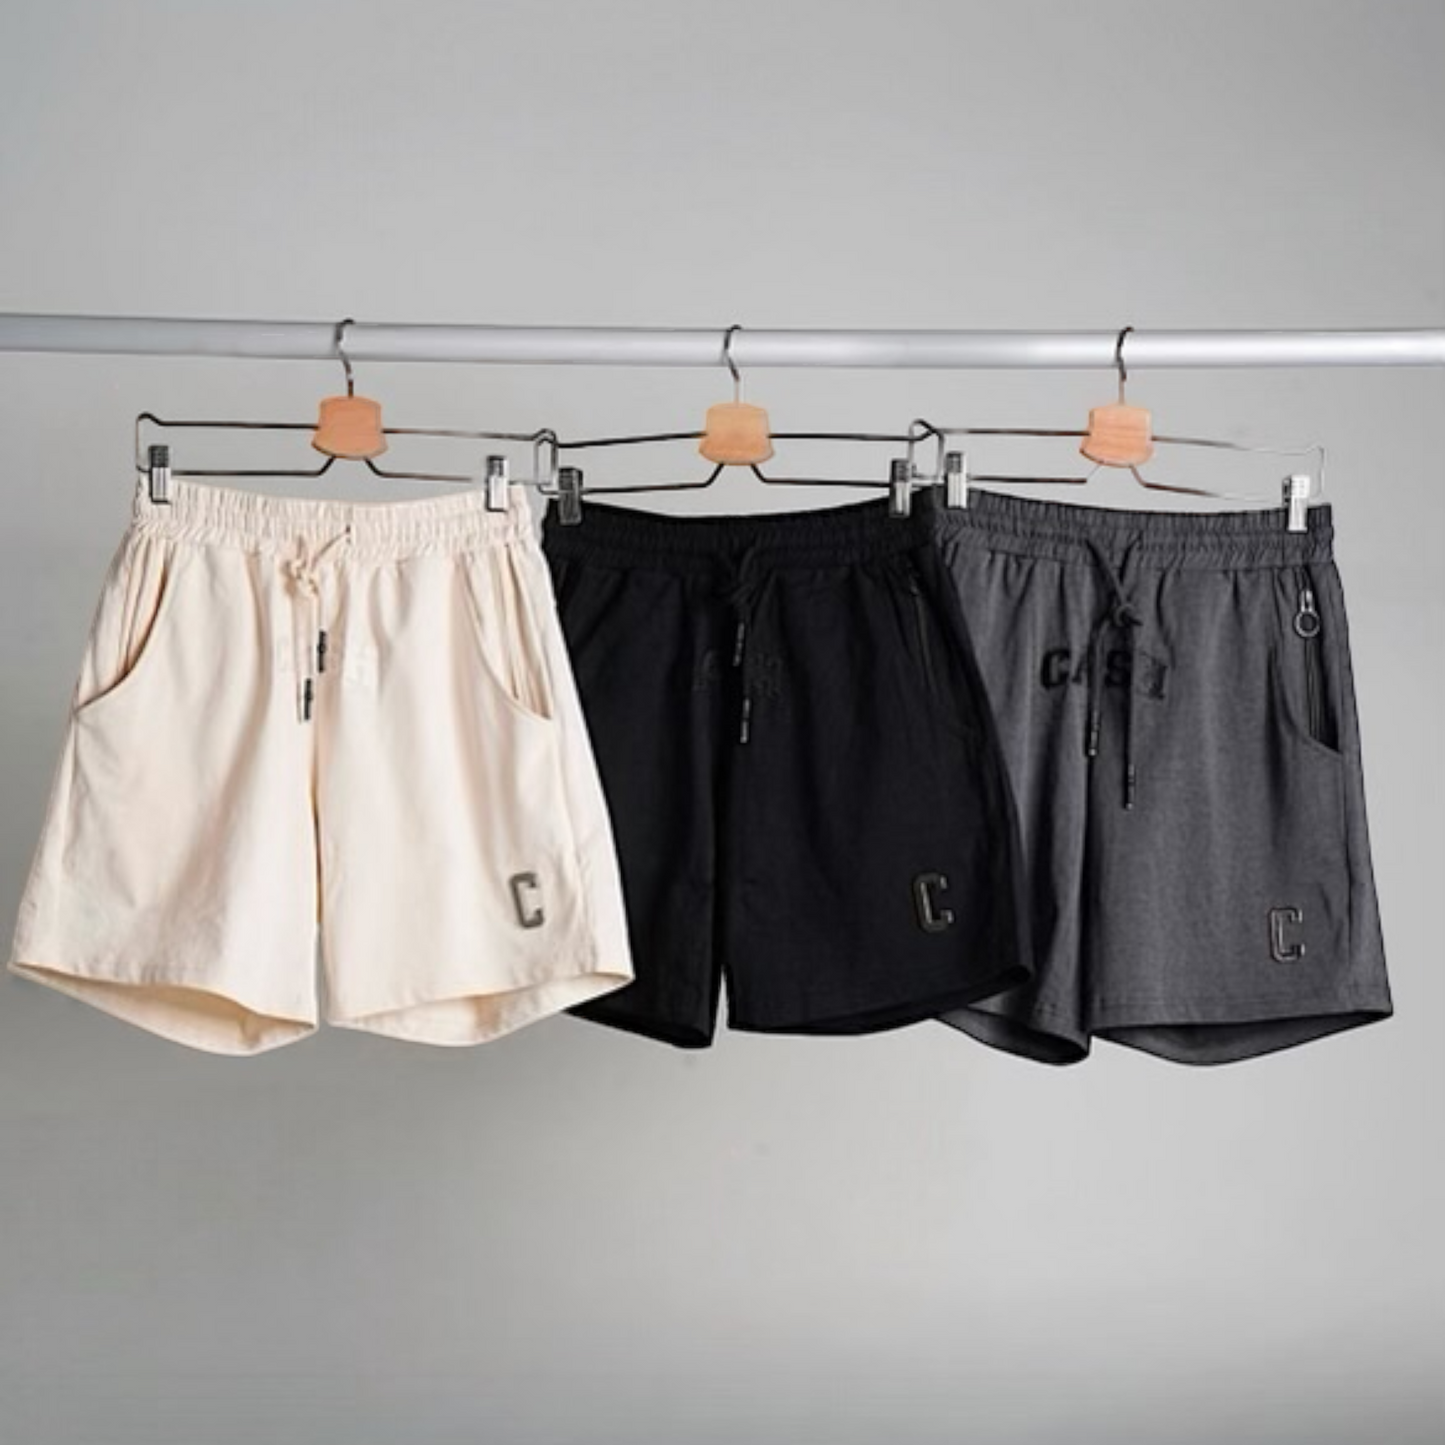 Chrome Shorts : Charcoal Grey